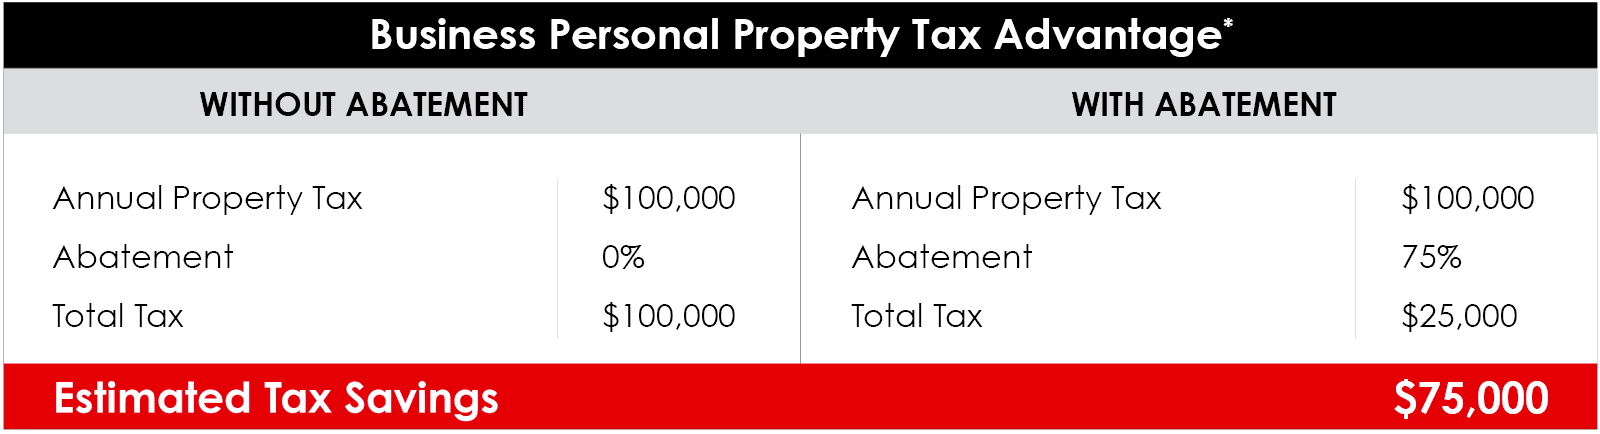 Nevada Business Personal Property Tax Advantage | $75,000 Estimated Tax Savings